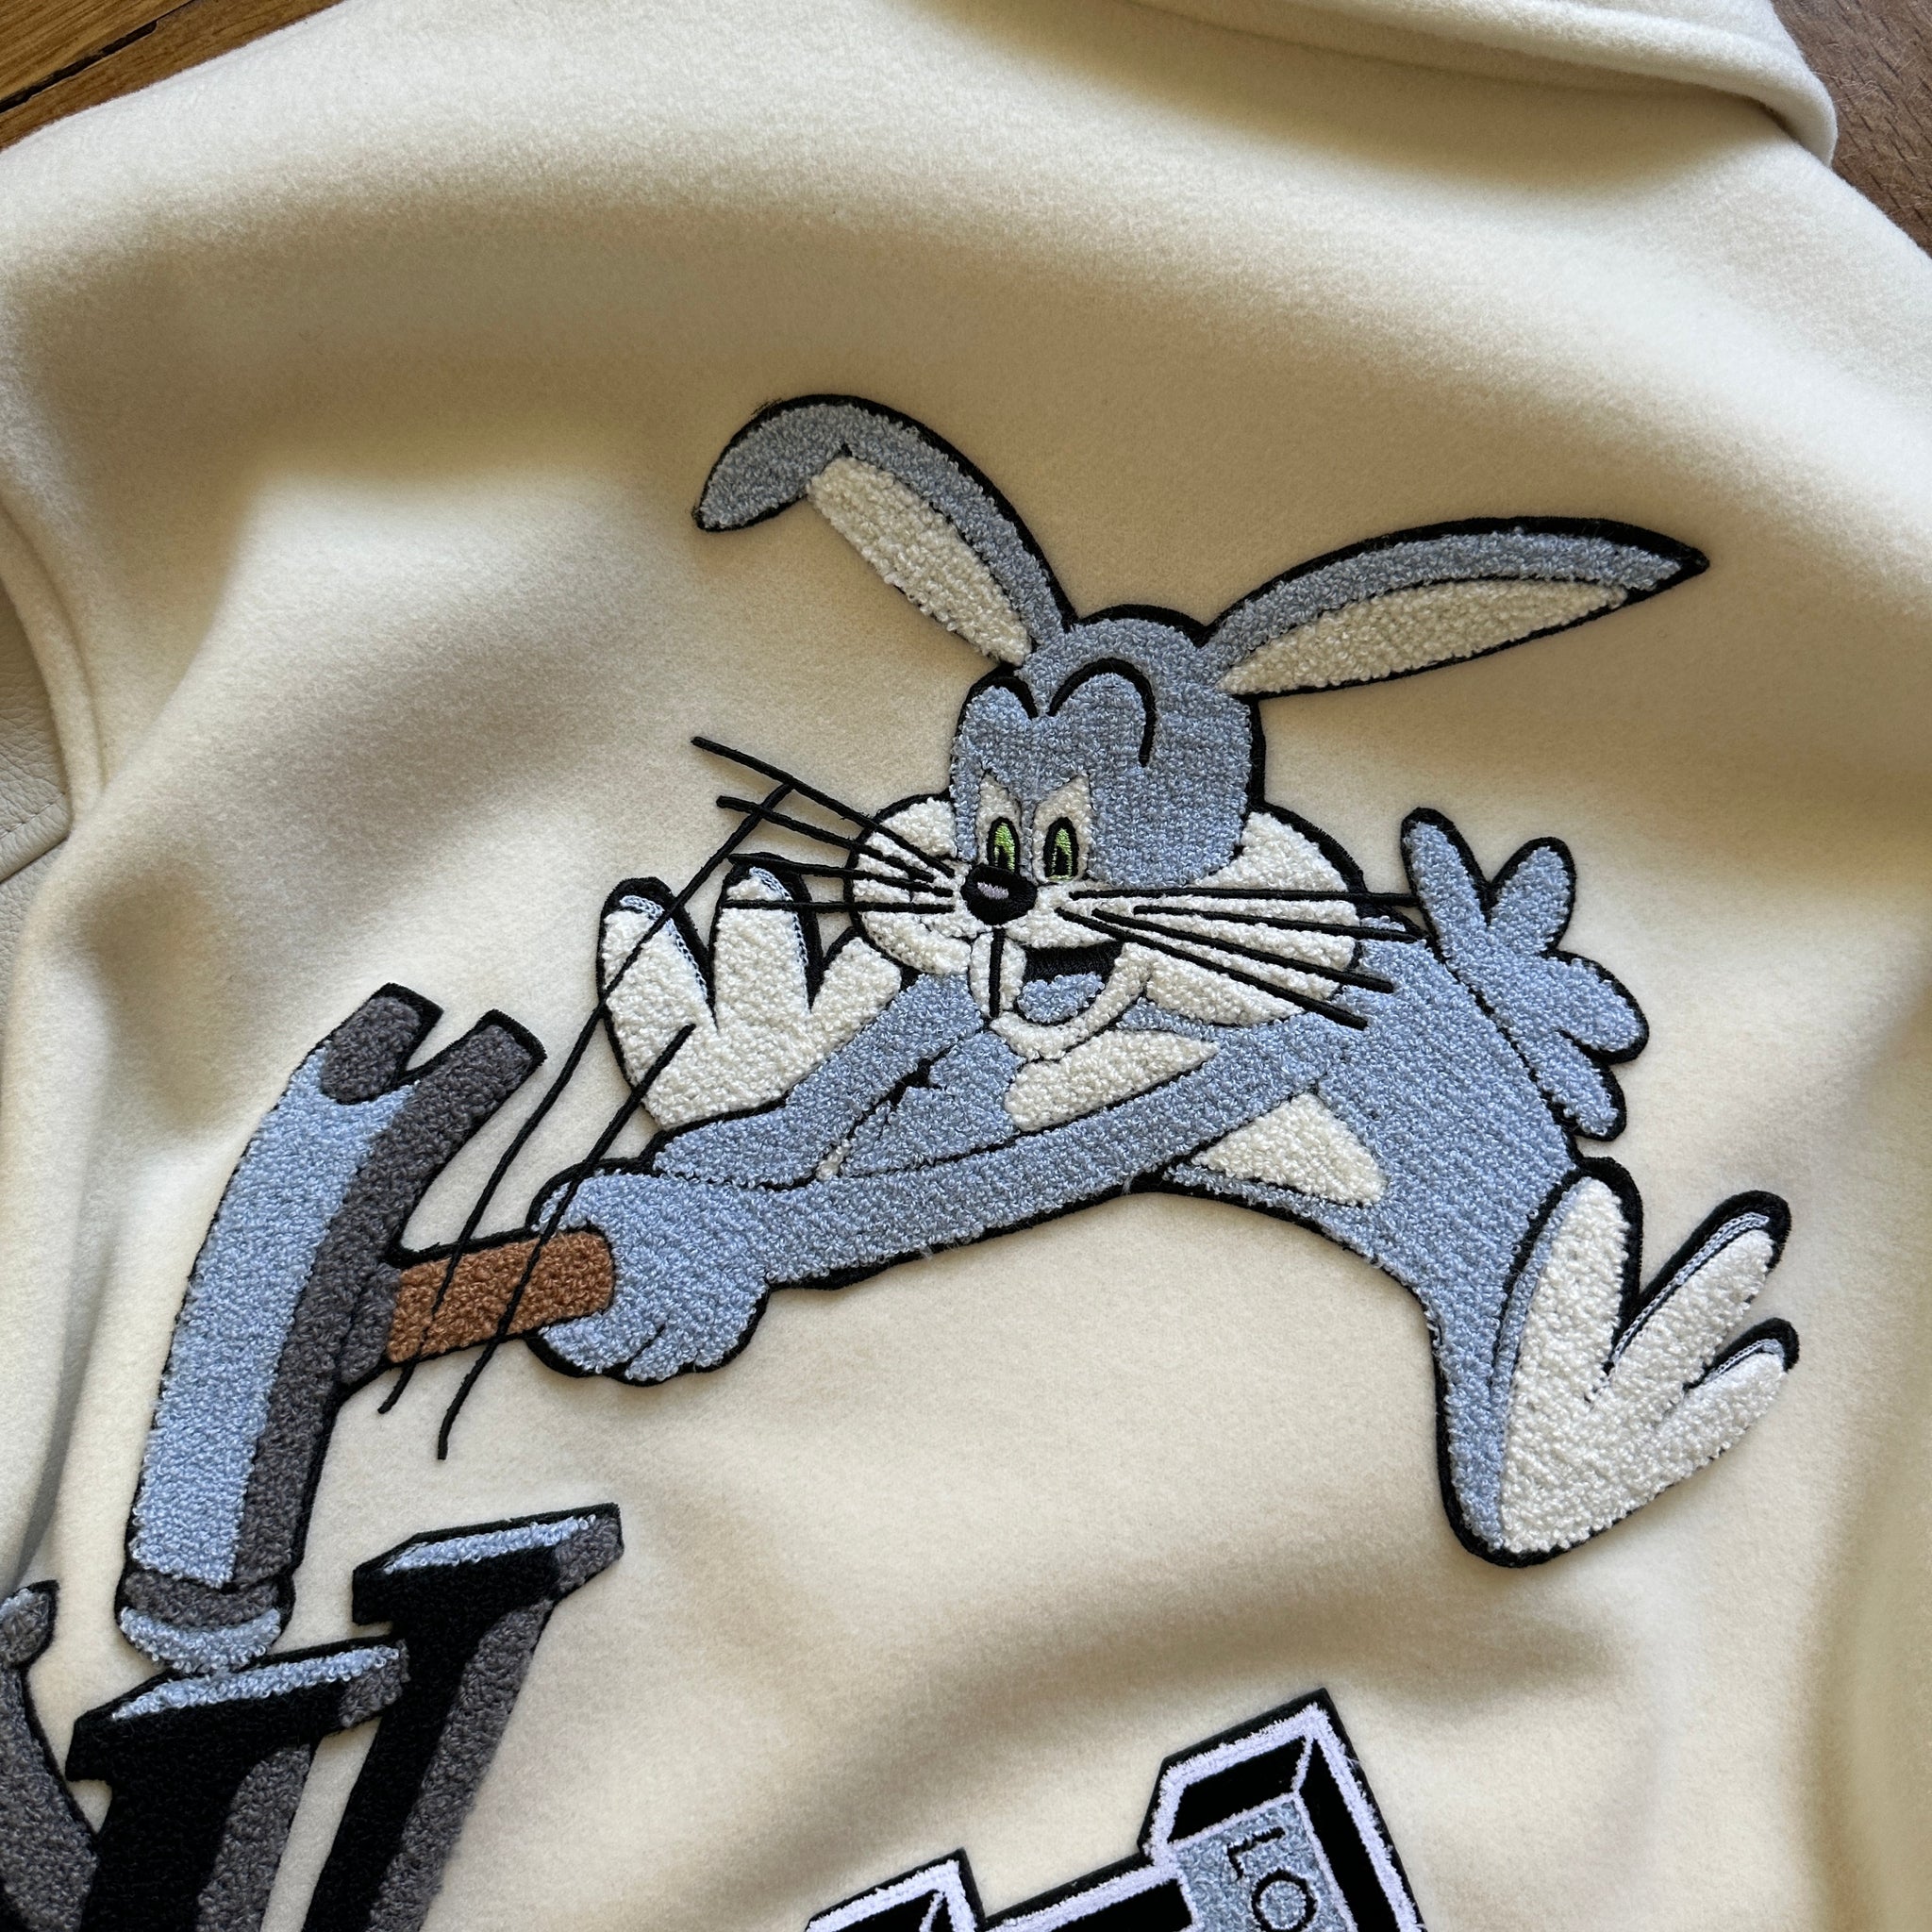 Jacket Makers Louis Vuitton Bunny Cream Varsity Jacket